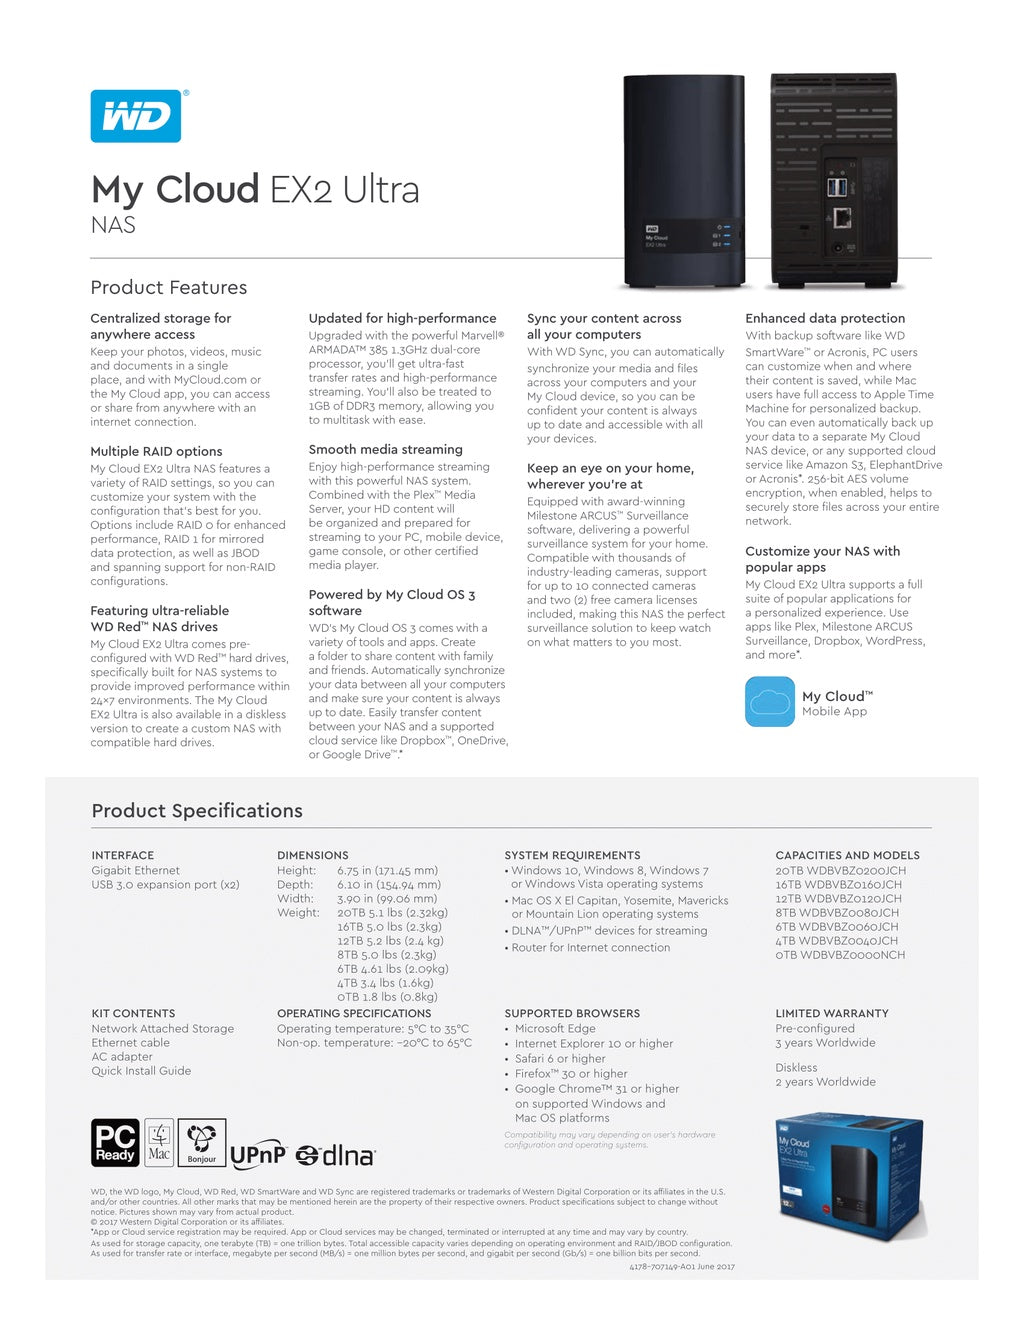 Western Digital WD My Cloud EX2 Ultra 2-Bay NAS Personal Cloud Storage